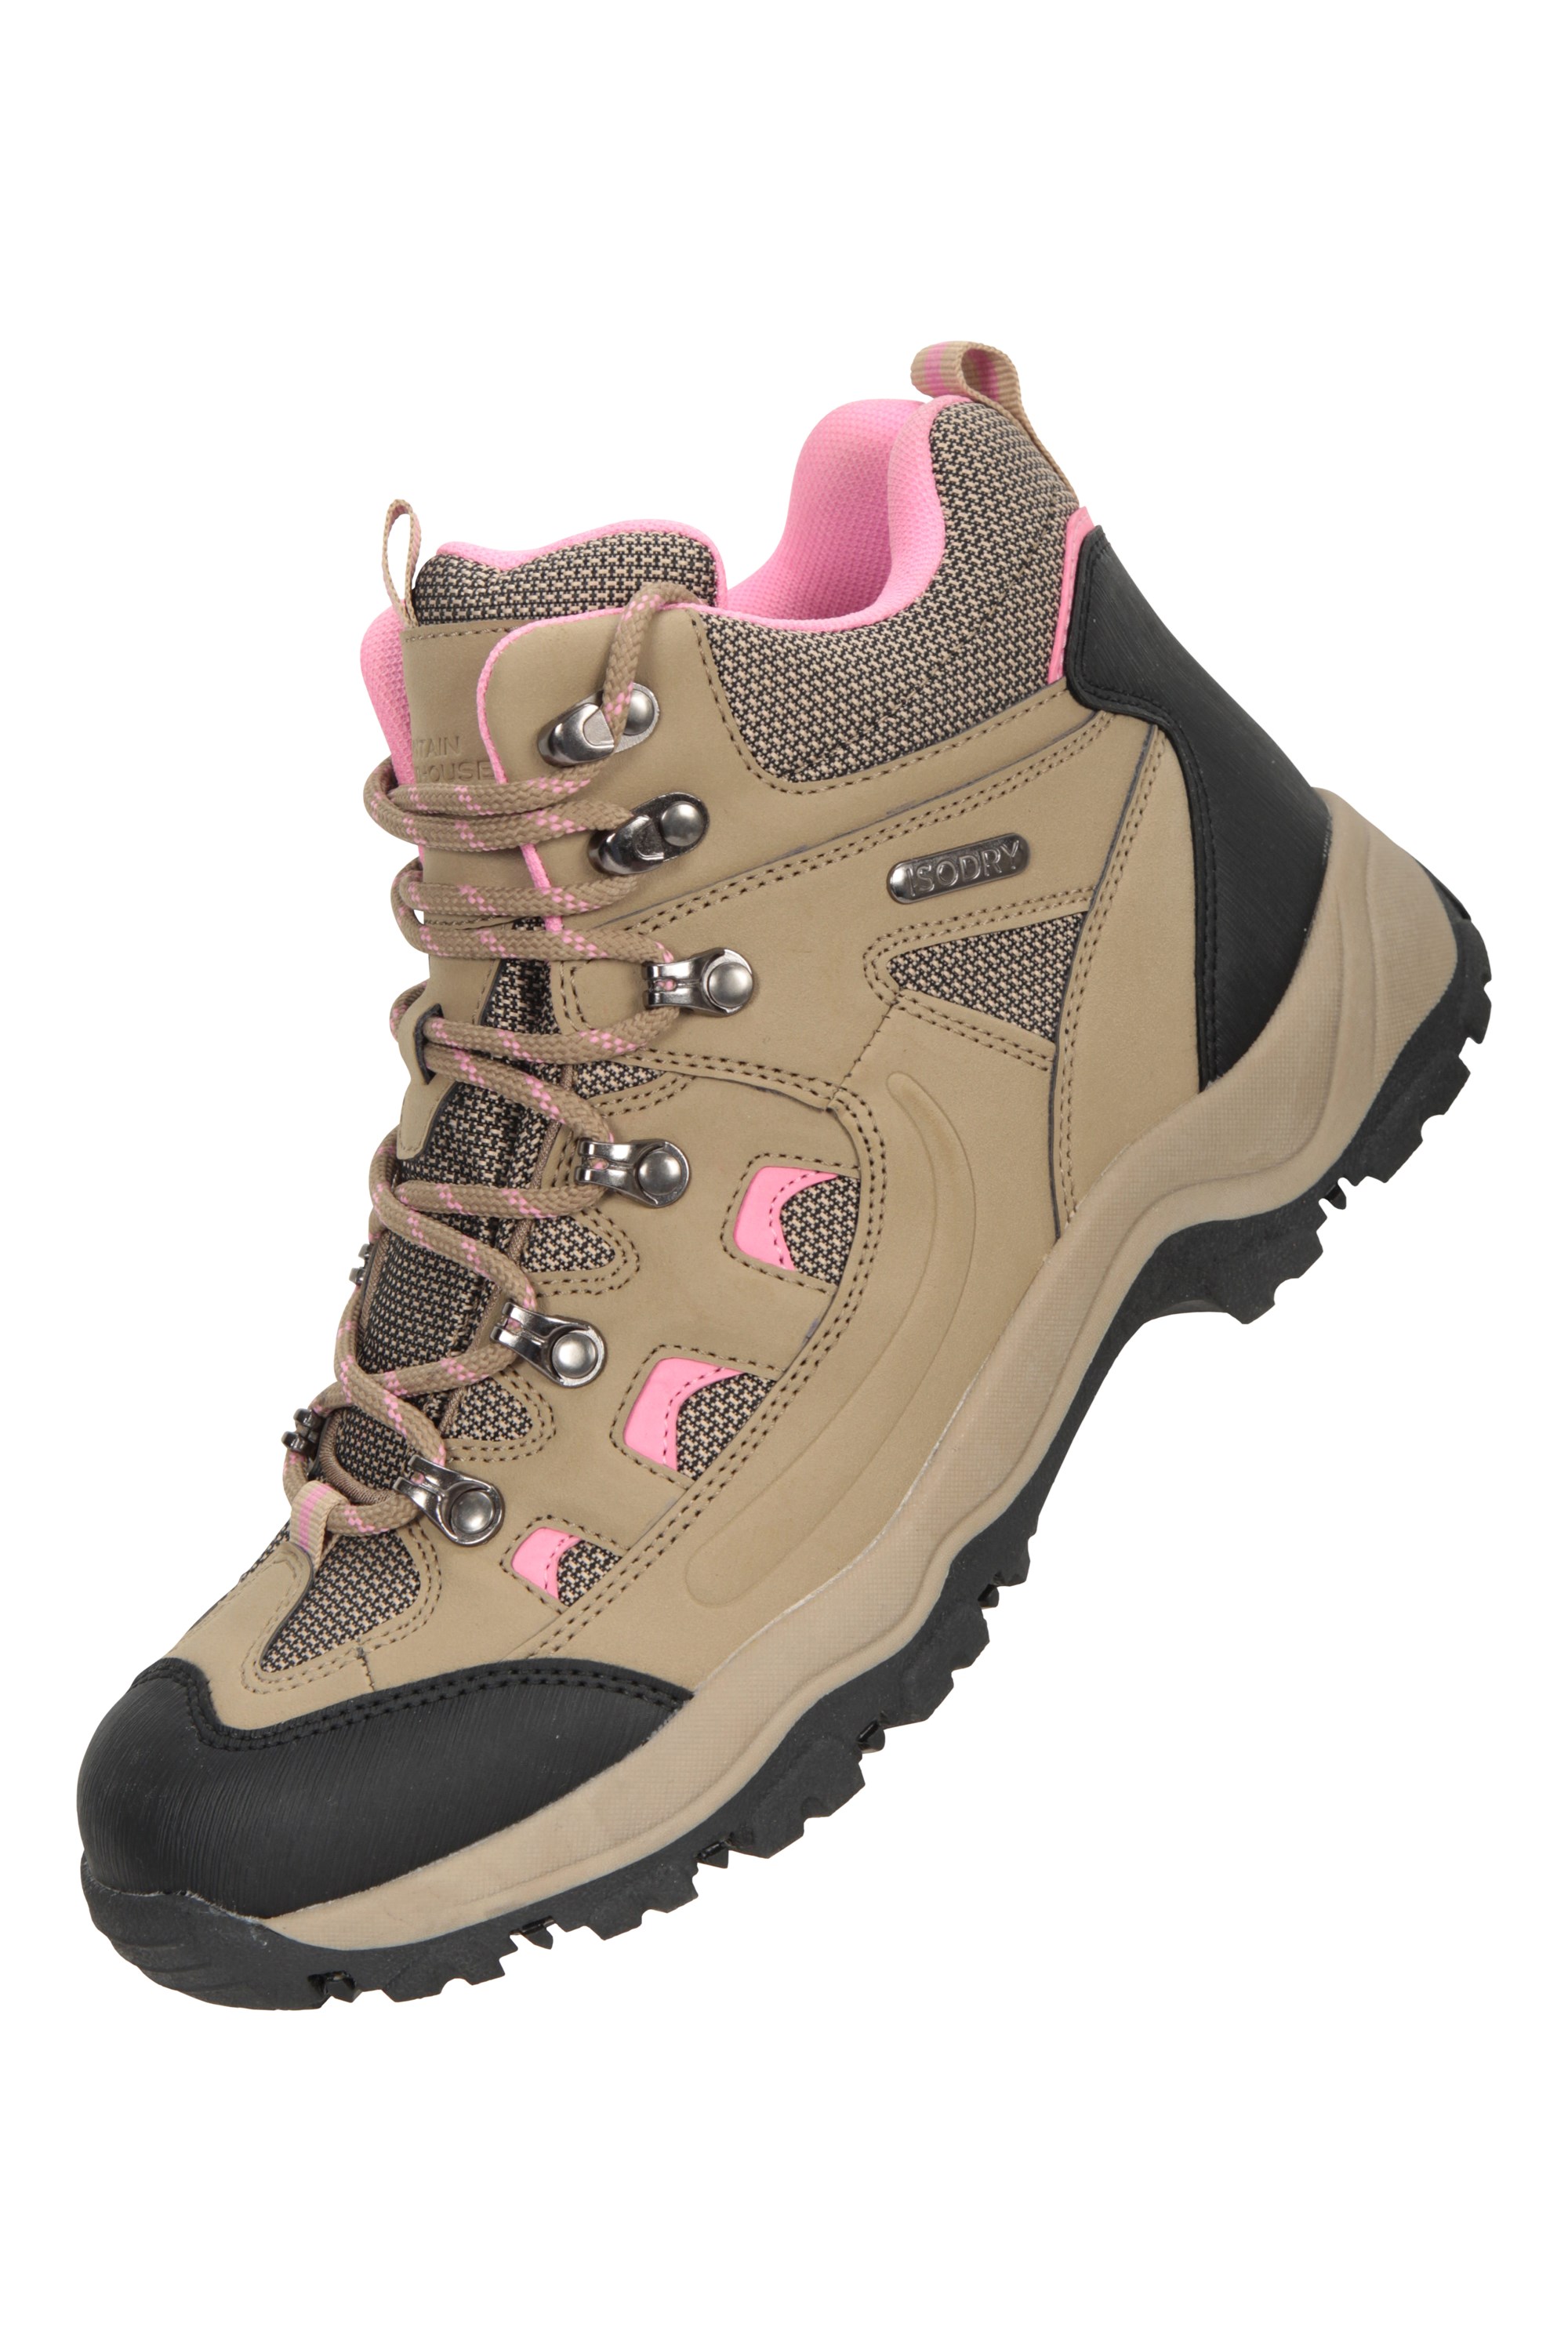 Mountain Warehouse  Women's Waterproof Hunting camping Hiking Trekking Boots 